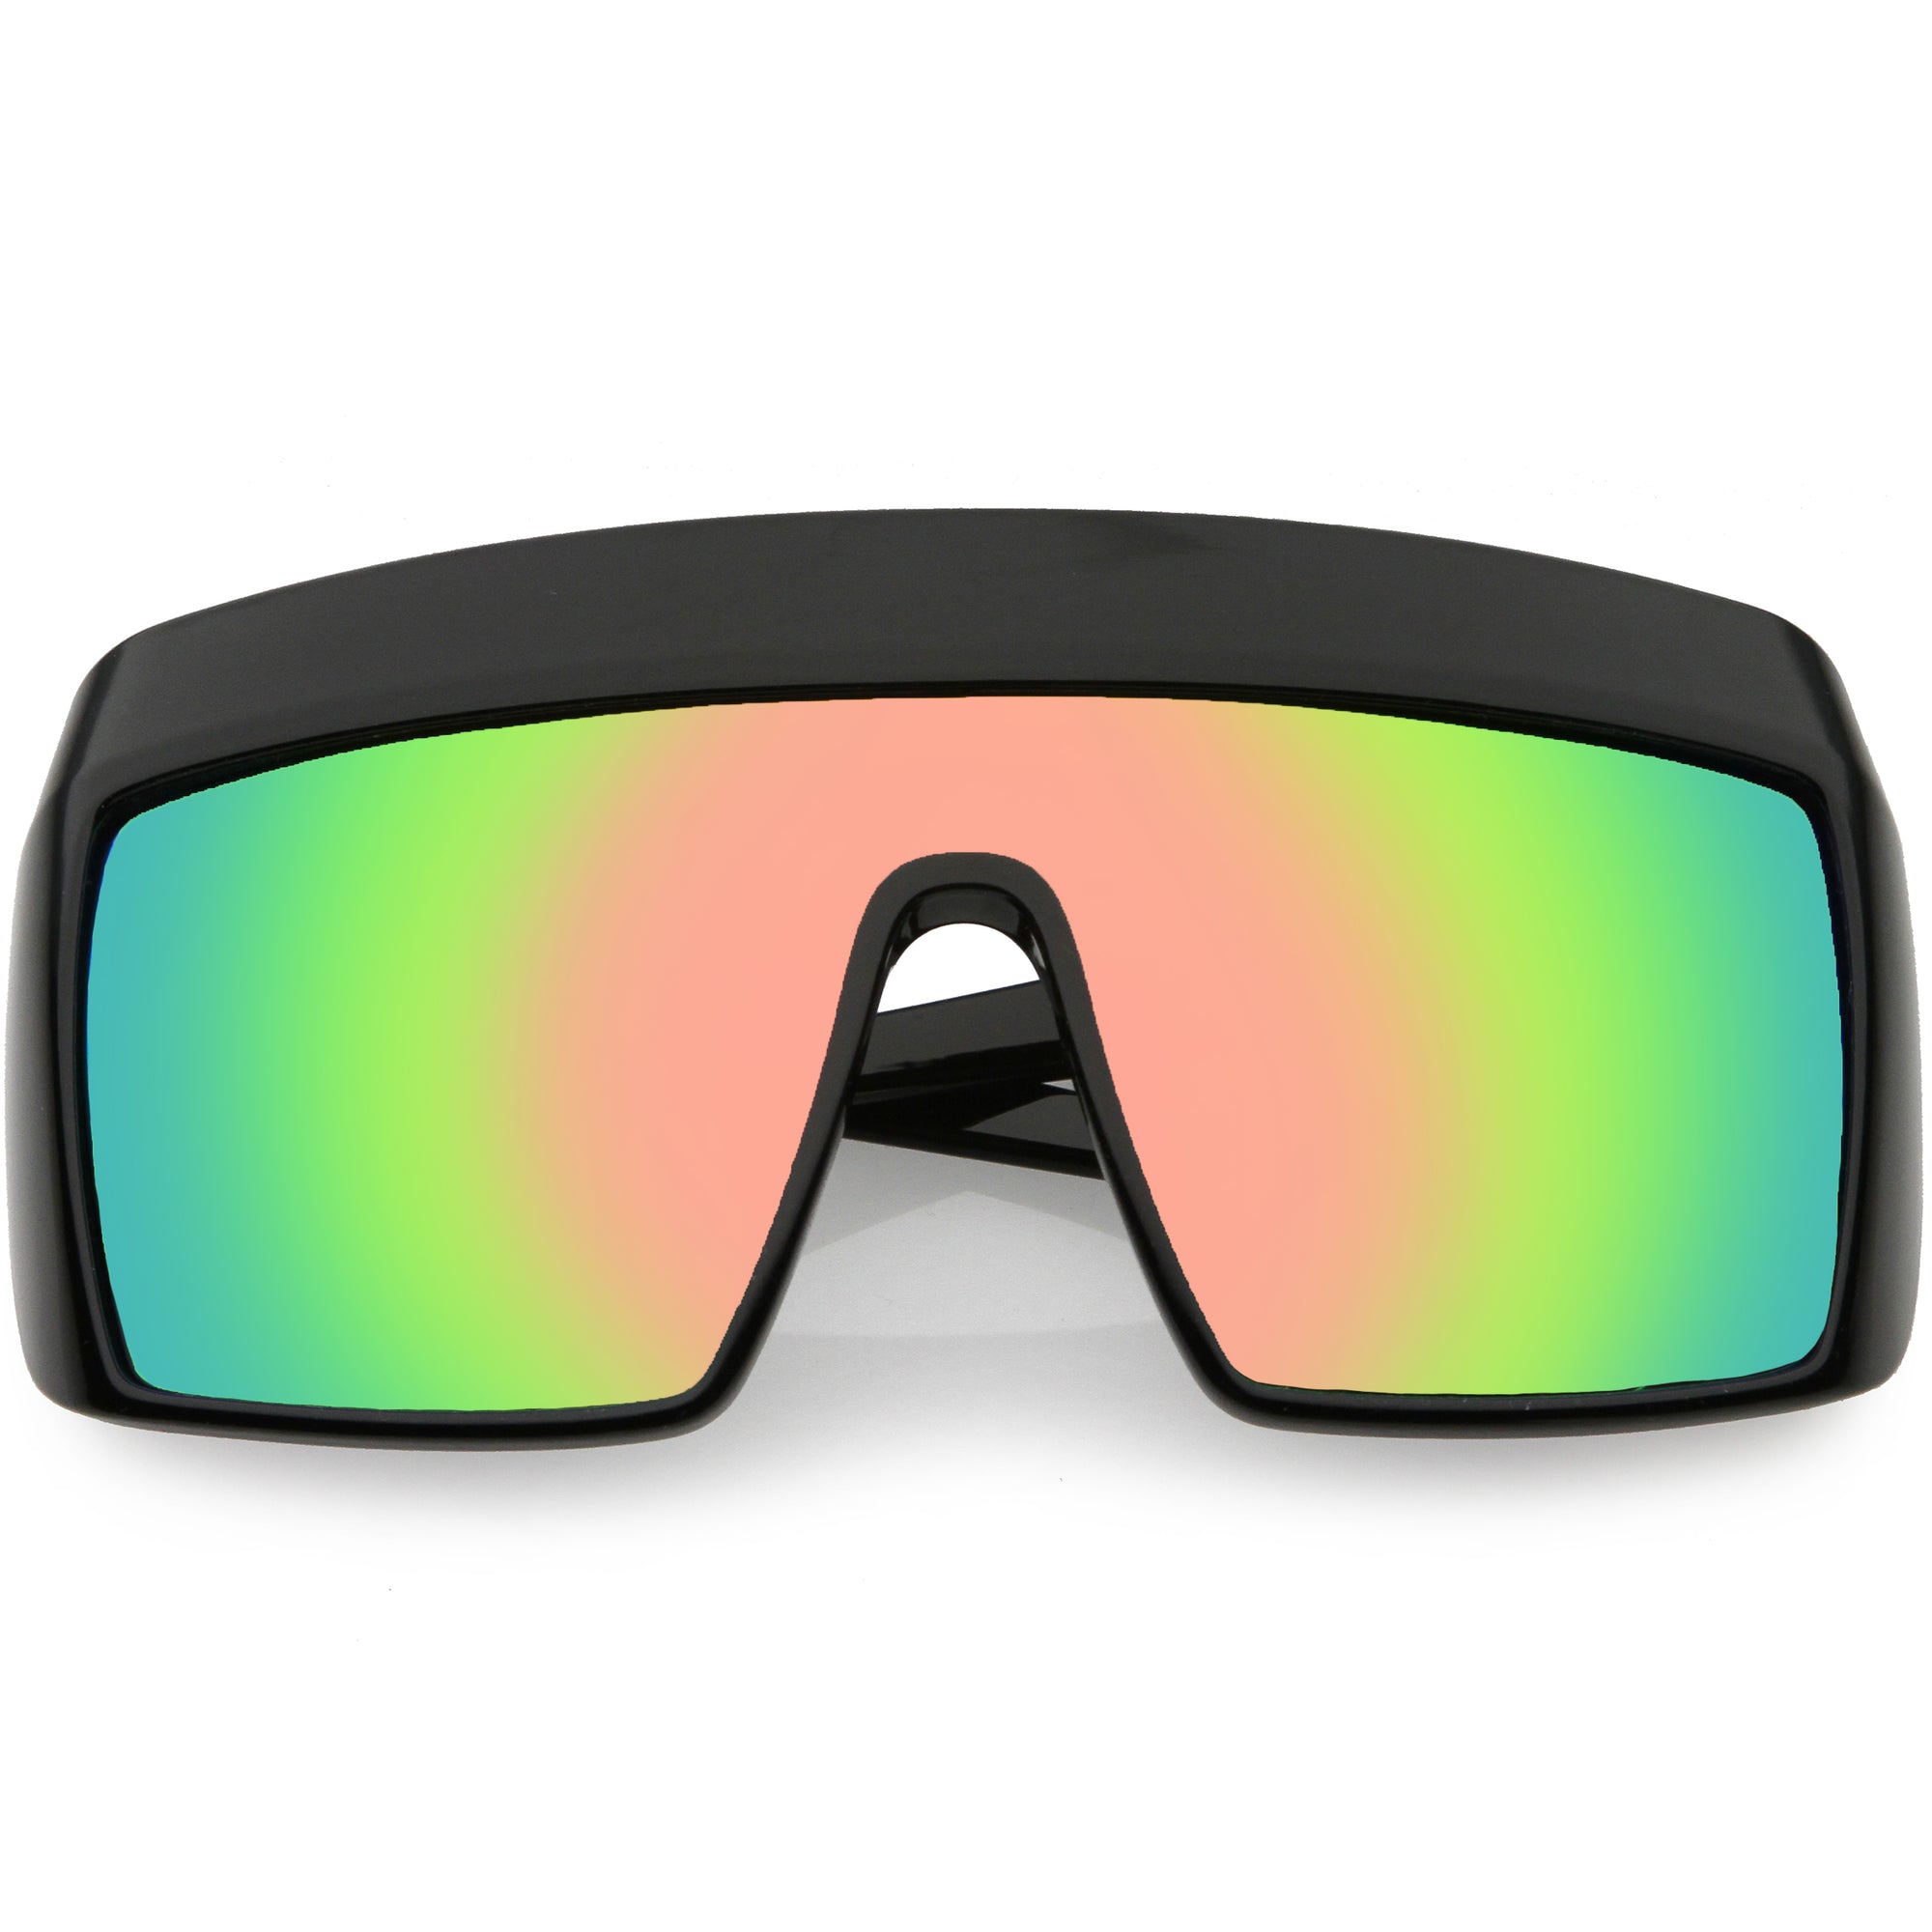 zeroUV - Protective Face Shield Full Cover Visor Glasses/Sunglasses  (Anti-Fog)